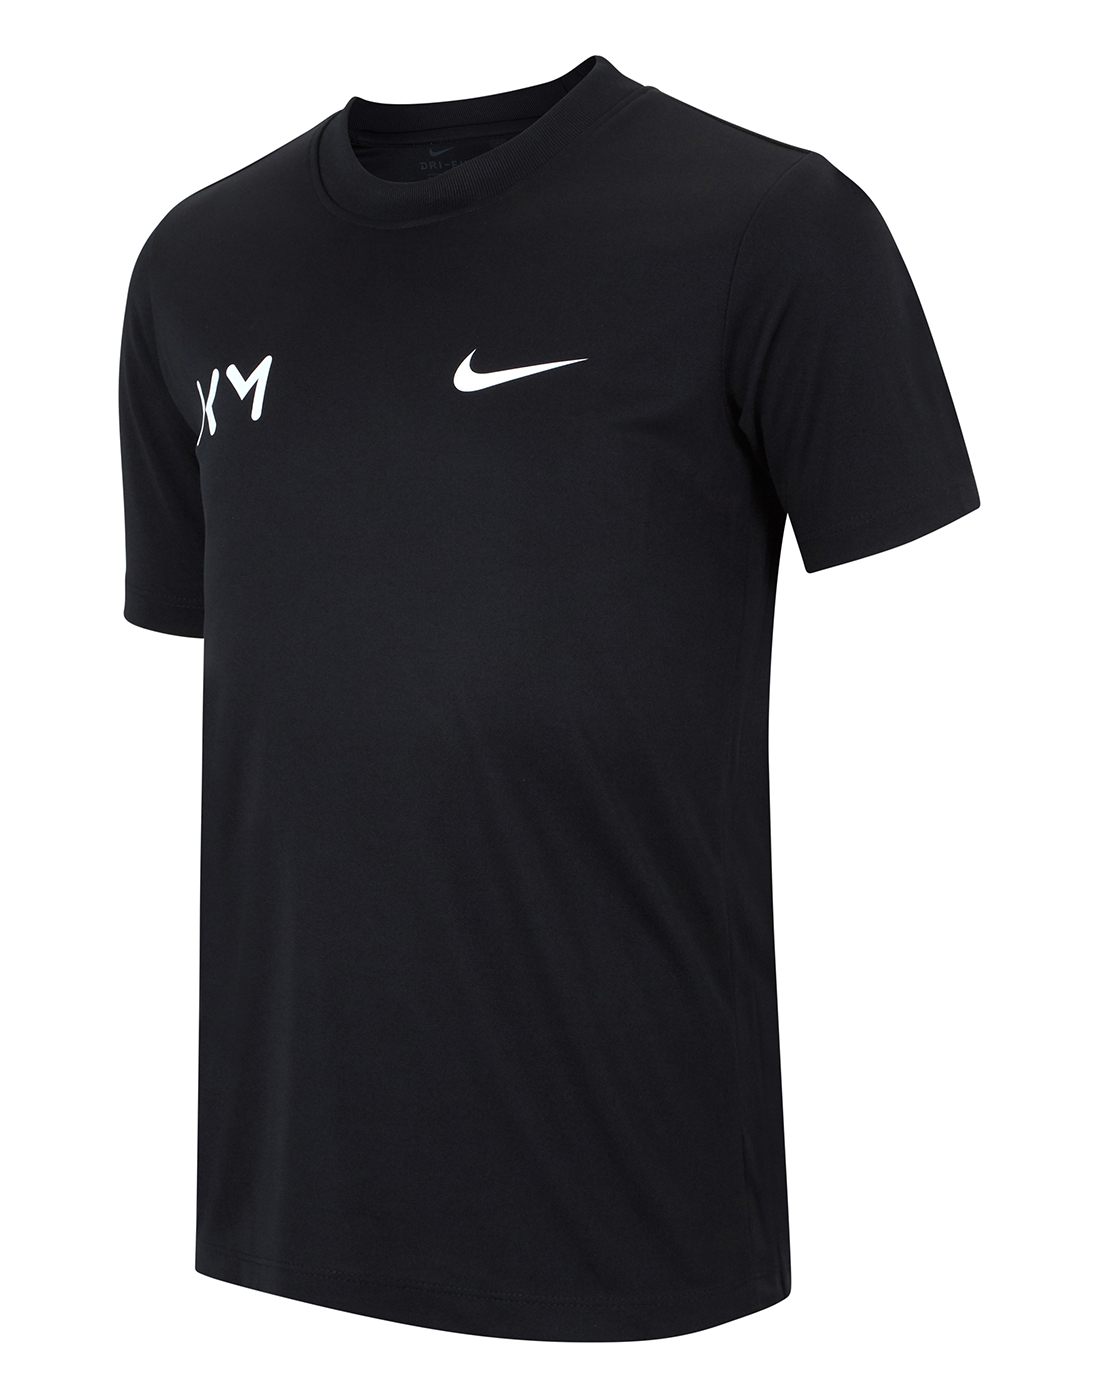 Nike Older Boys Mbappe Jersey T-Shirt - Black | Life Style Sports EU